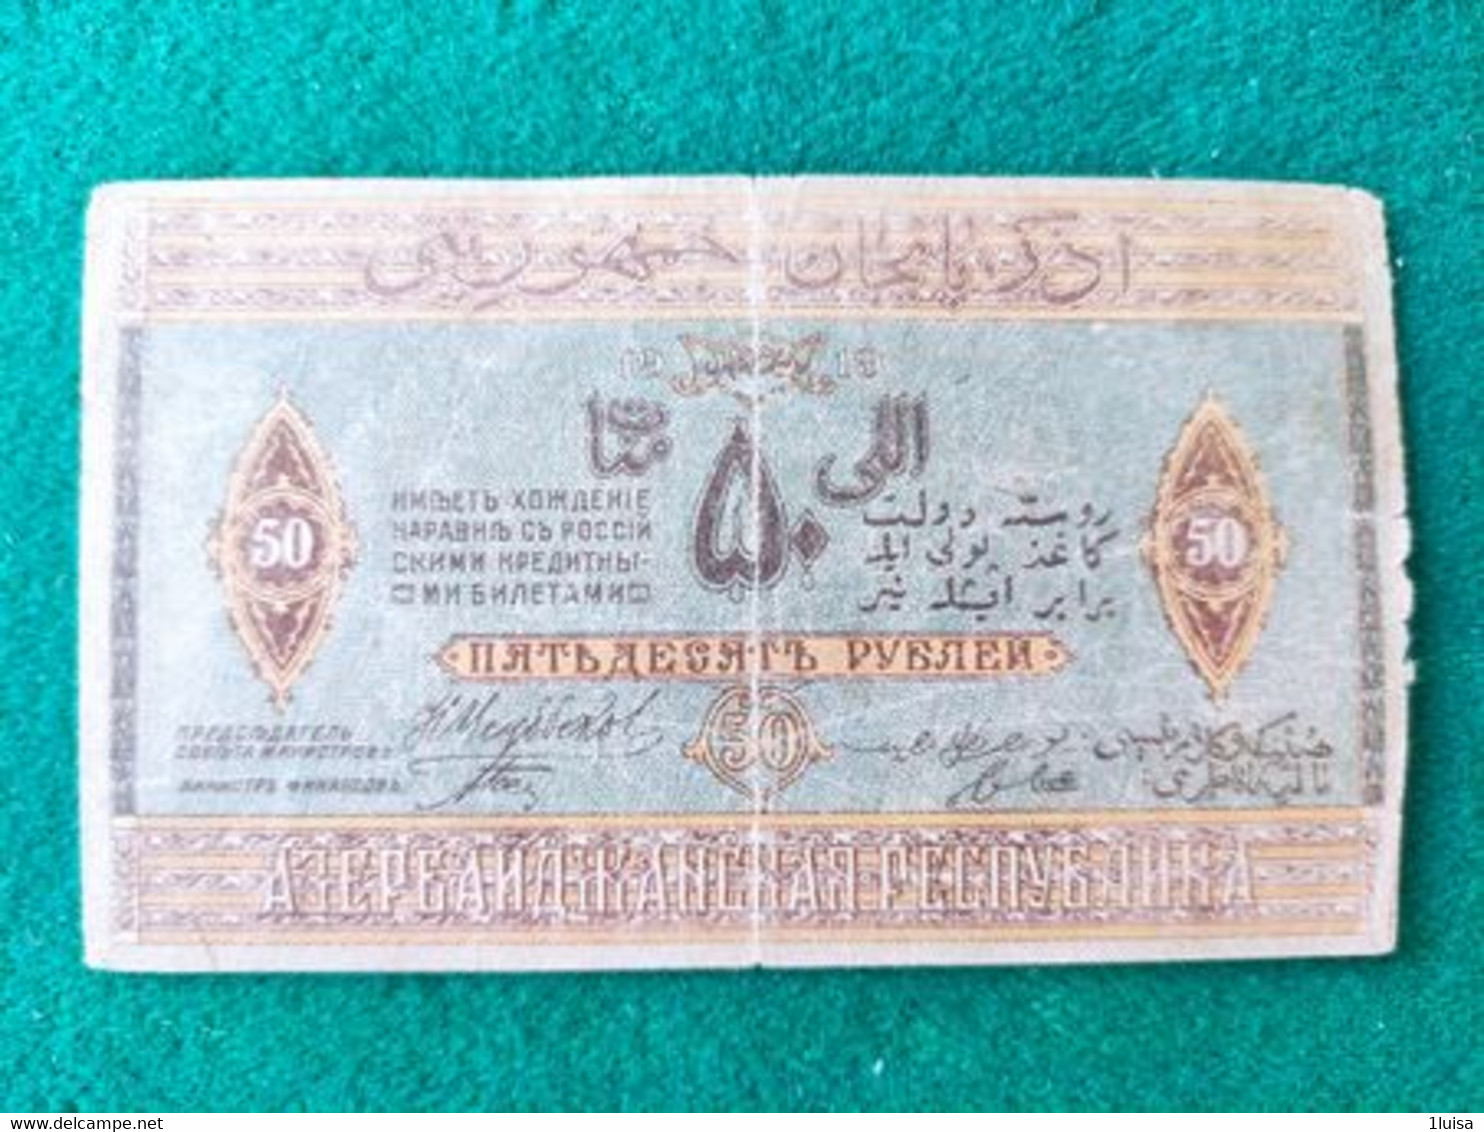 Azerbaigian 50 Rubli 1919 - Aserbaidschan